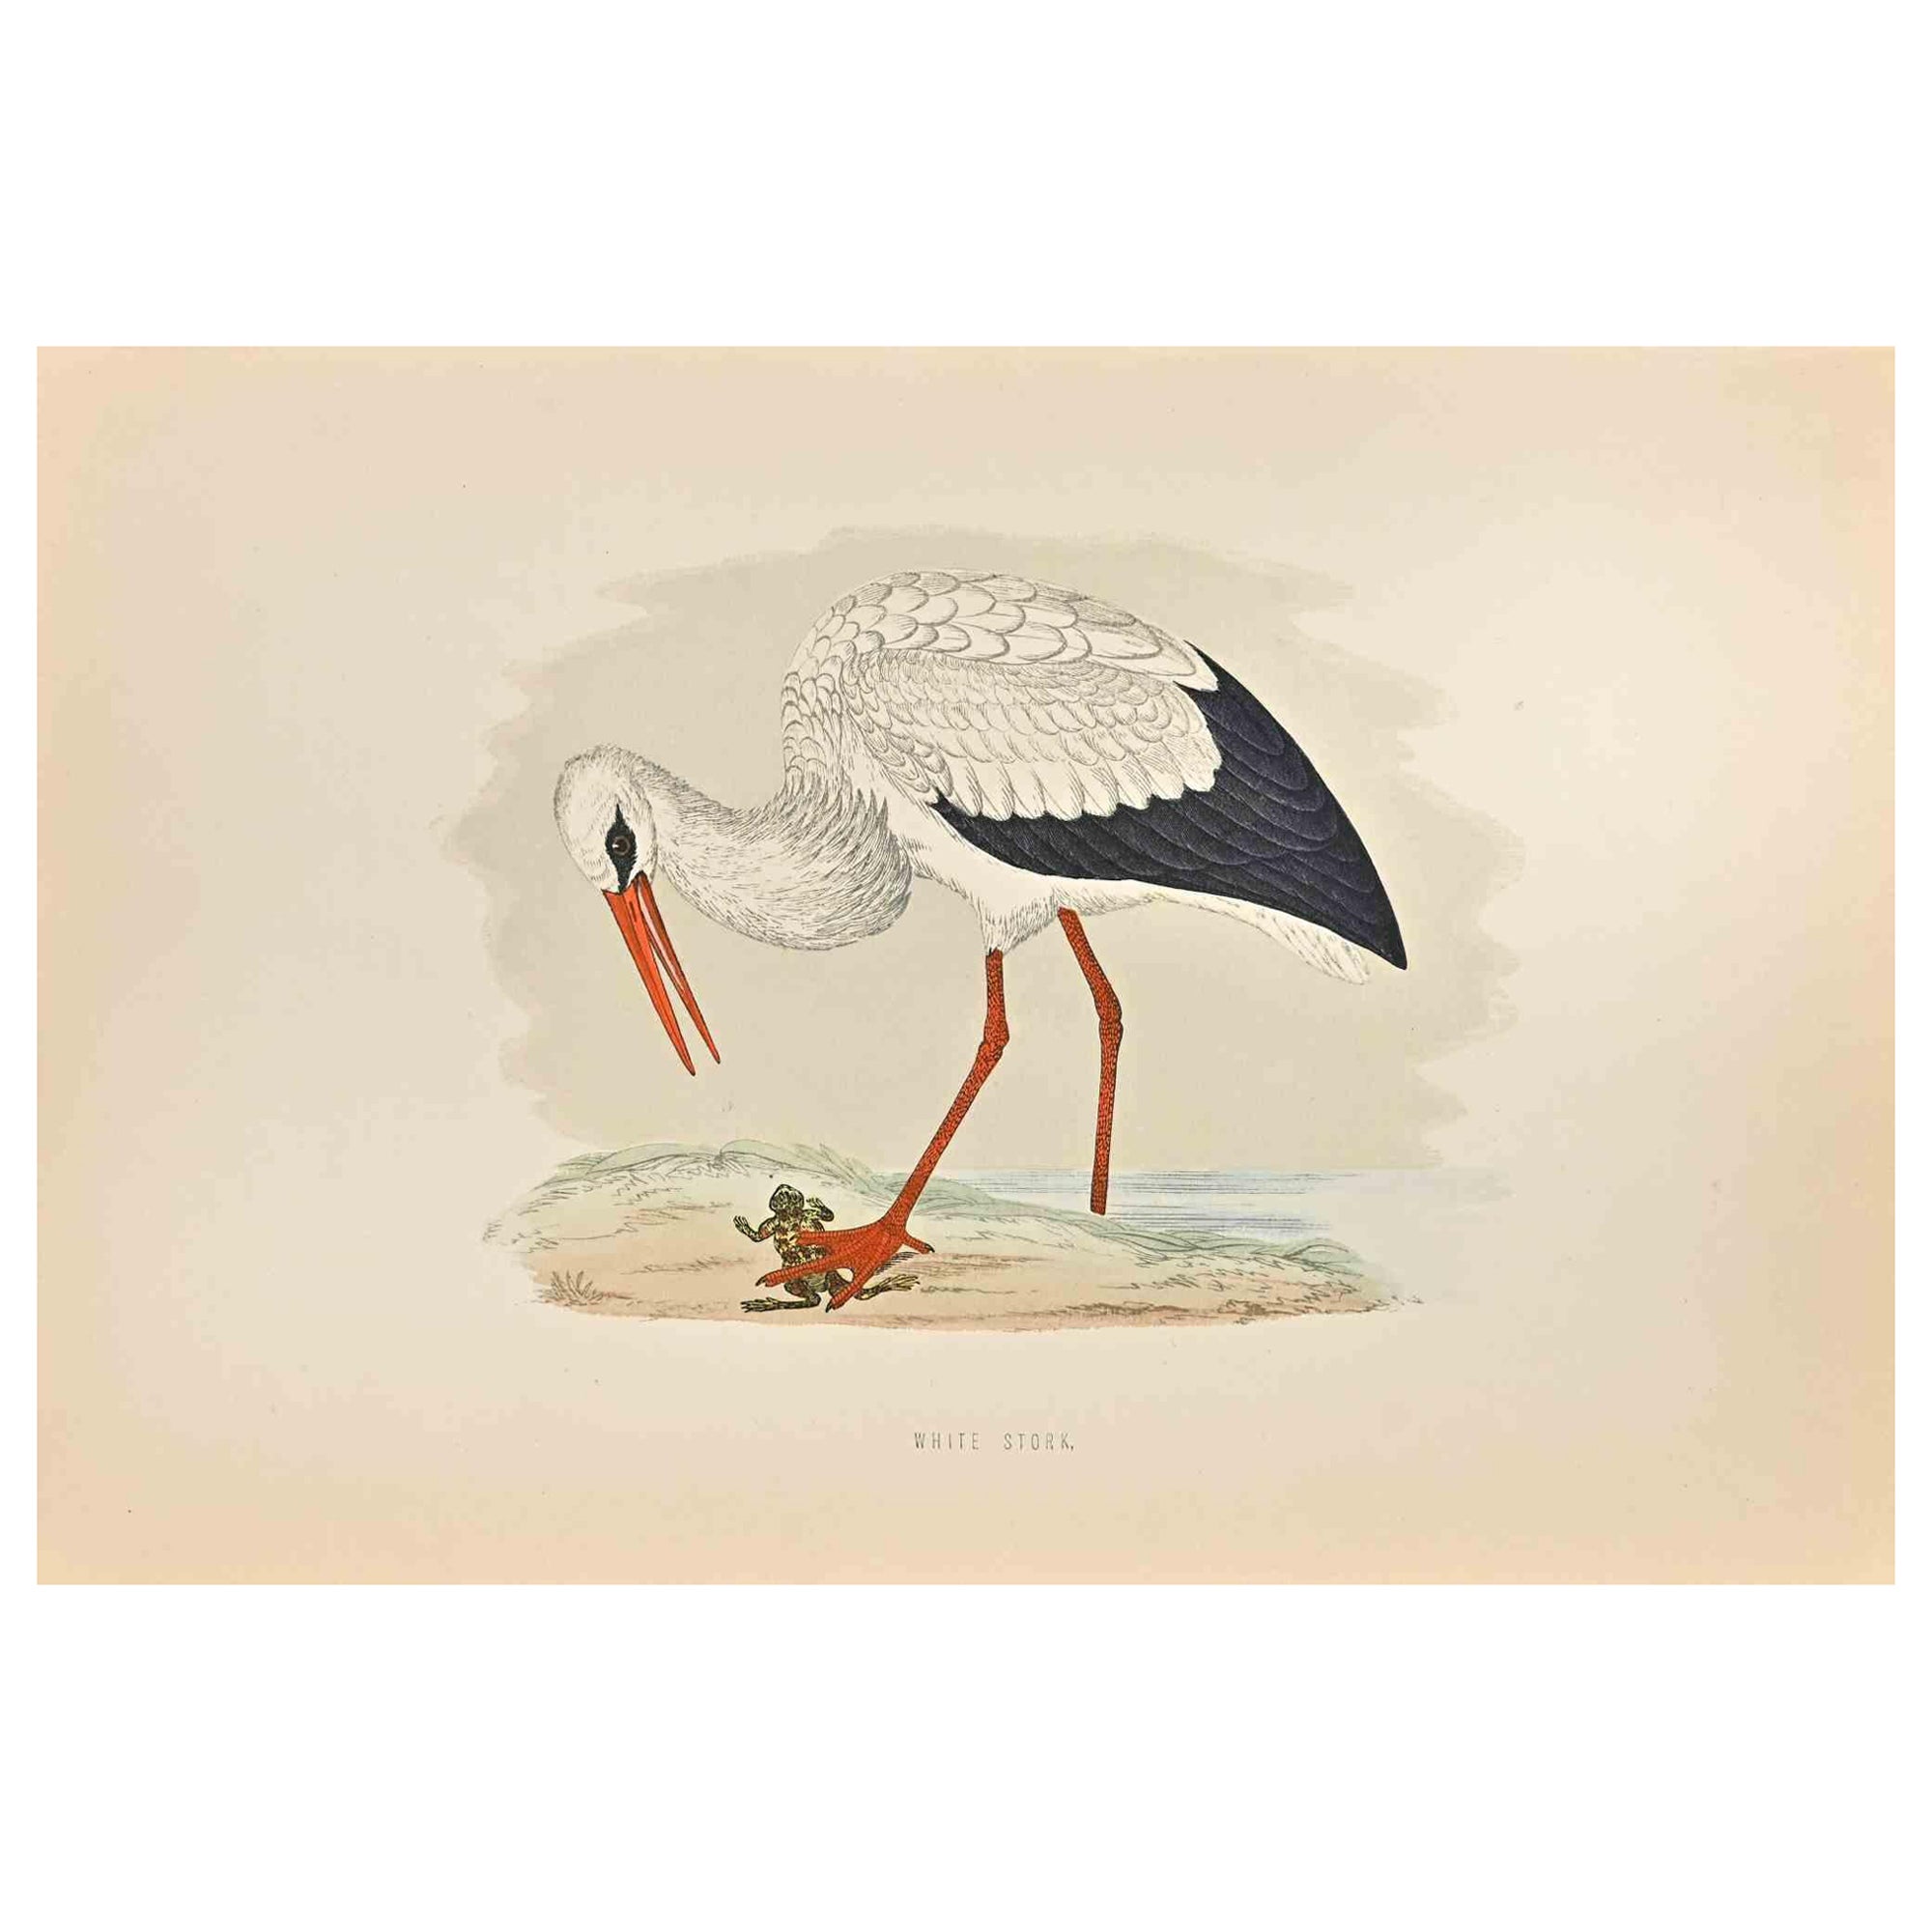 alexander stork